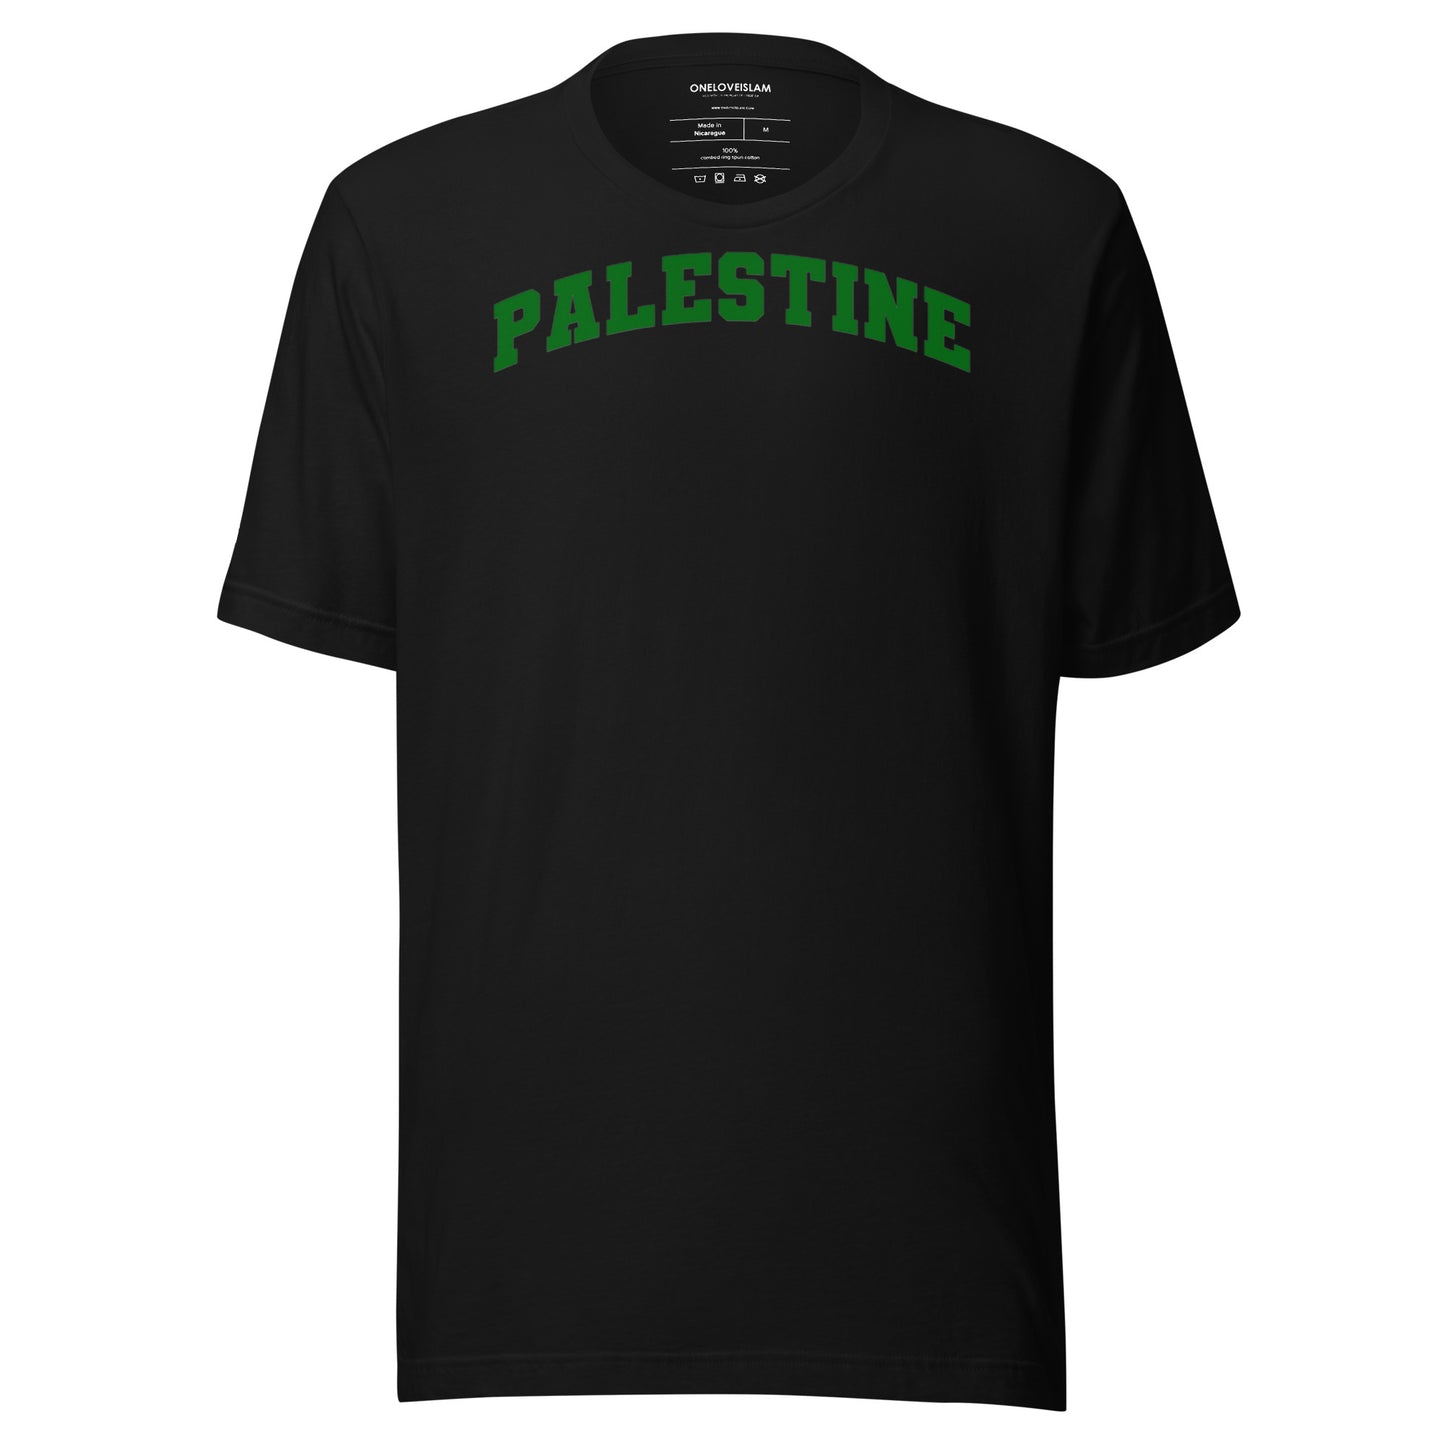 Palestine T